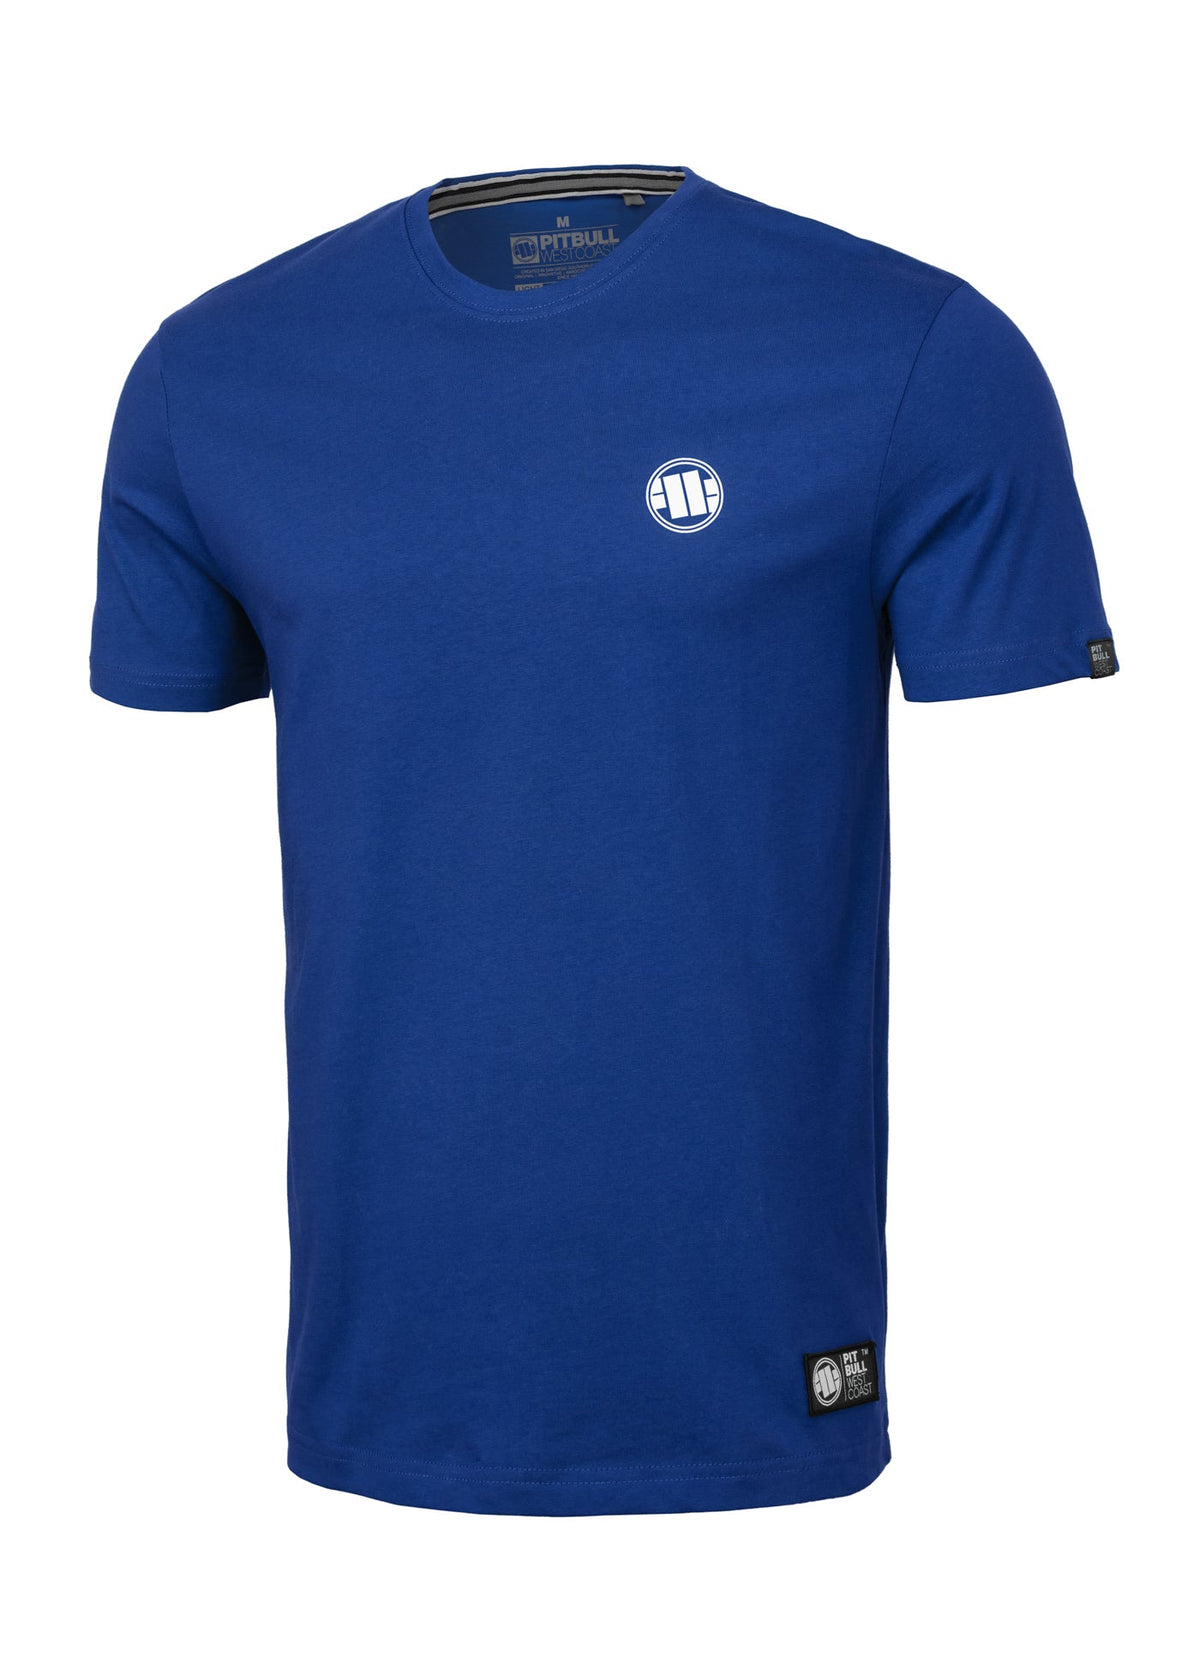 SMALL LOGO 21 T-shirt Royal Blue